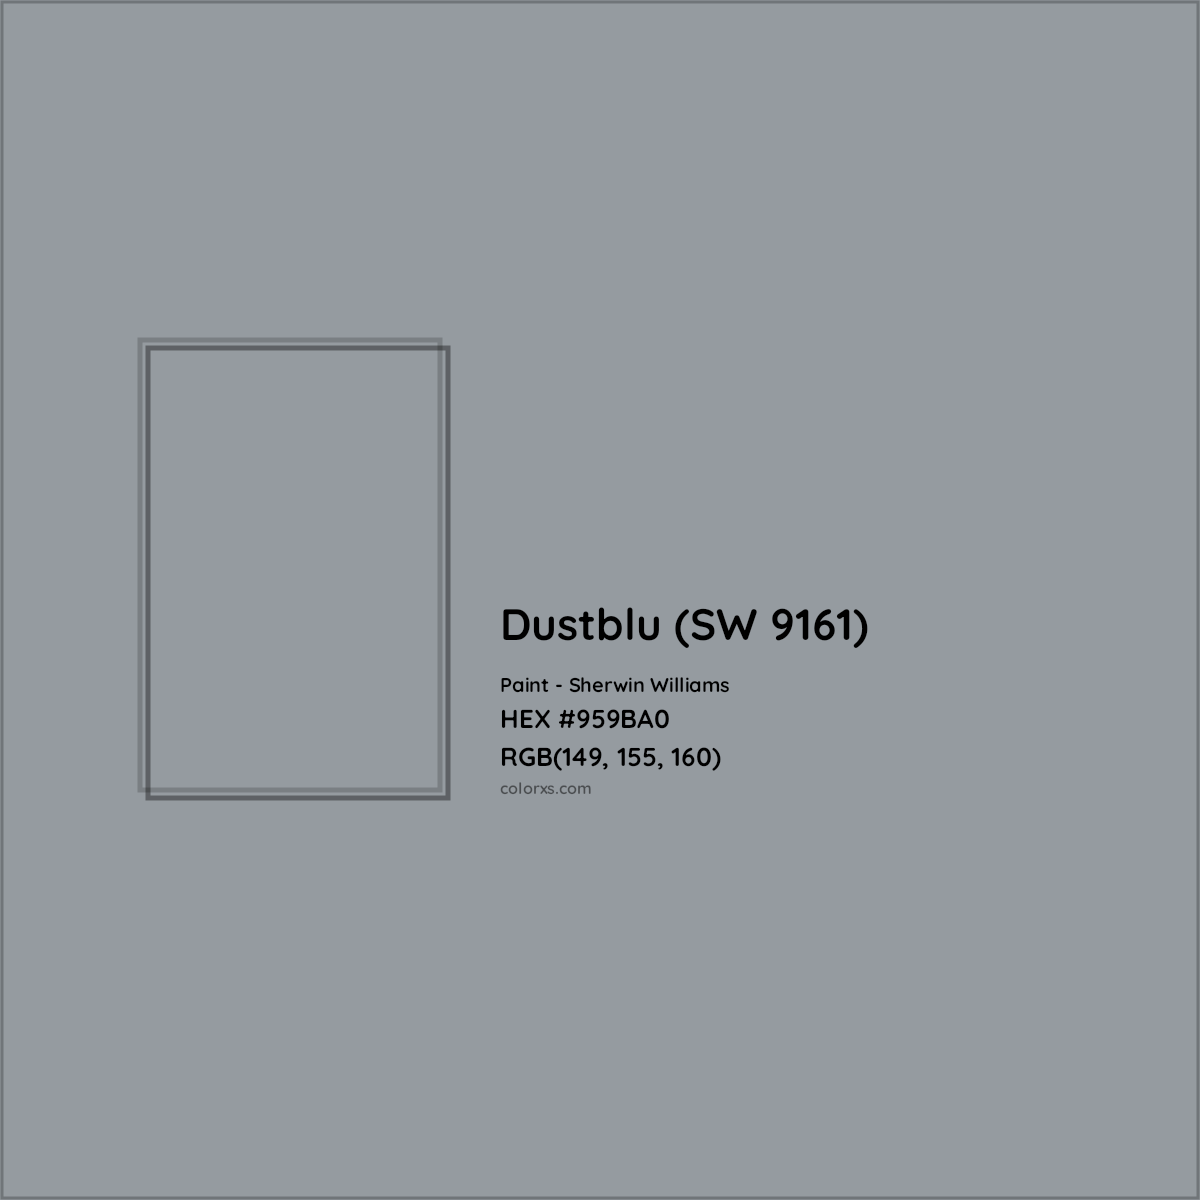 HEX #959BA0 Dustblu (SW 9161) Paint Sherwin Williams - Color Code